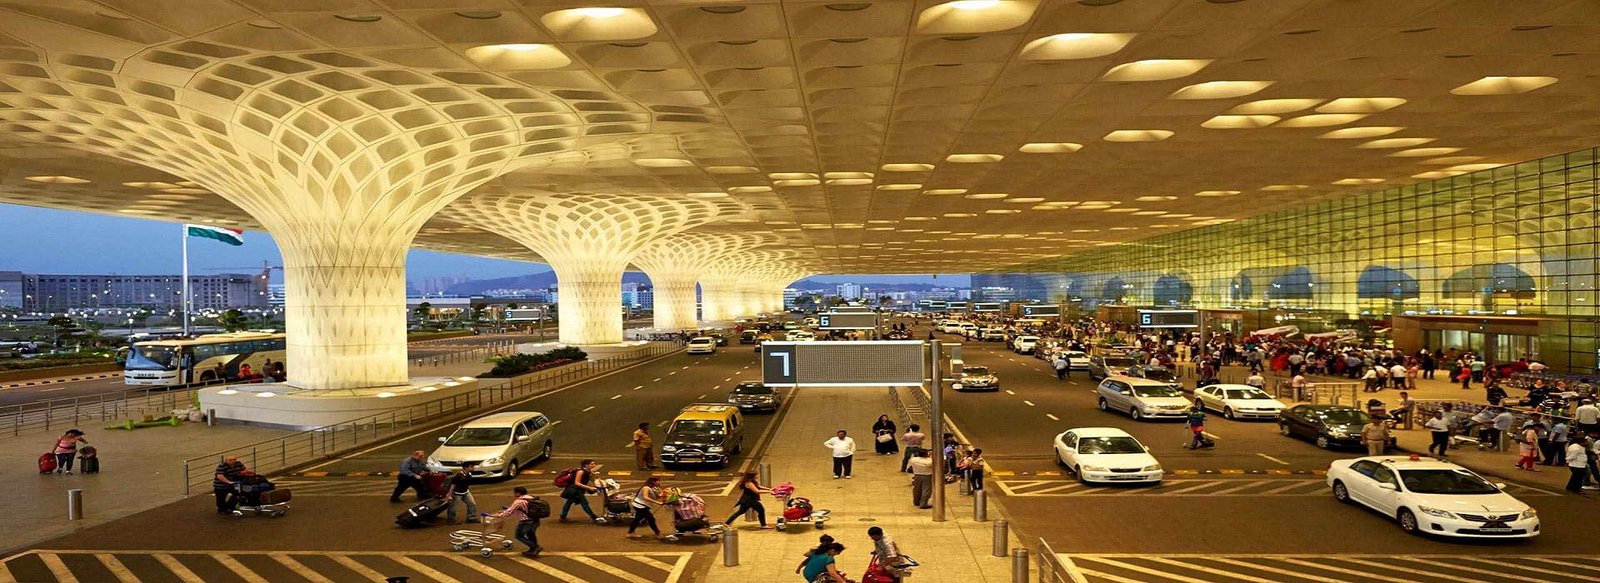 International Airport in India